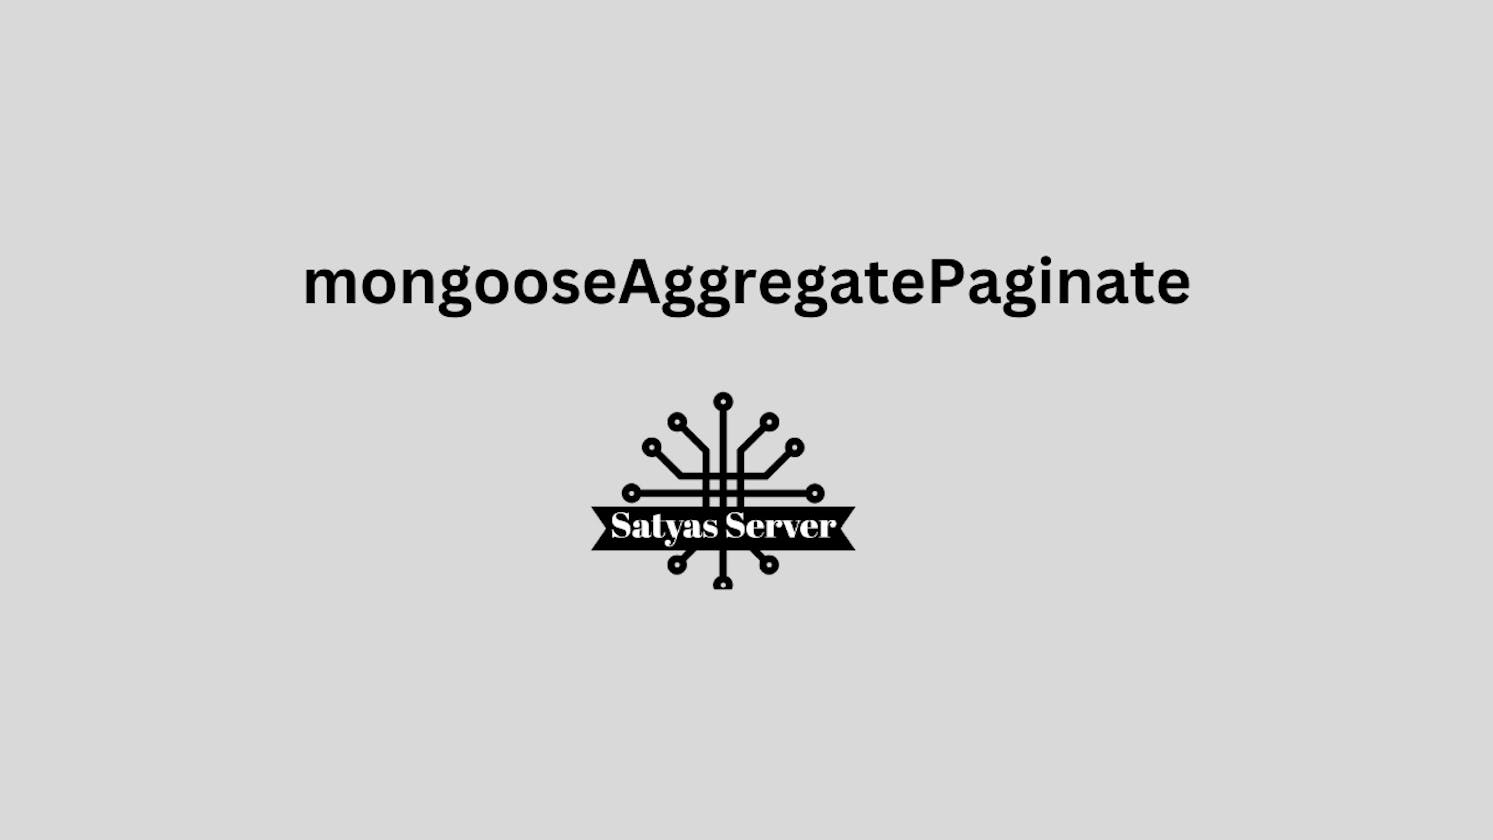 mongooseAggregatePaginate in simple language